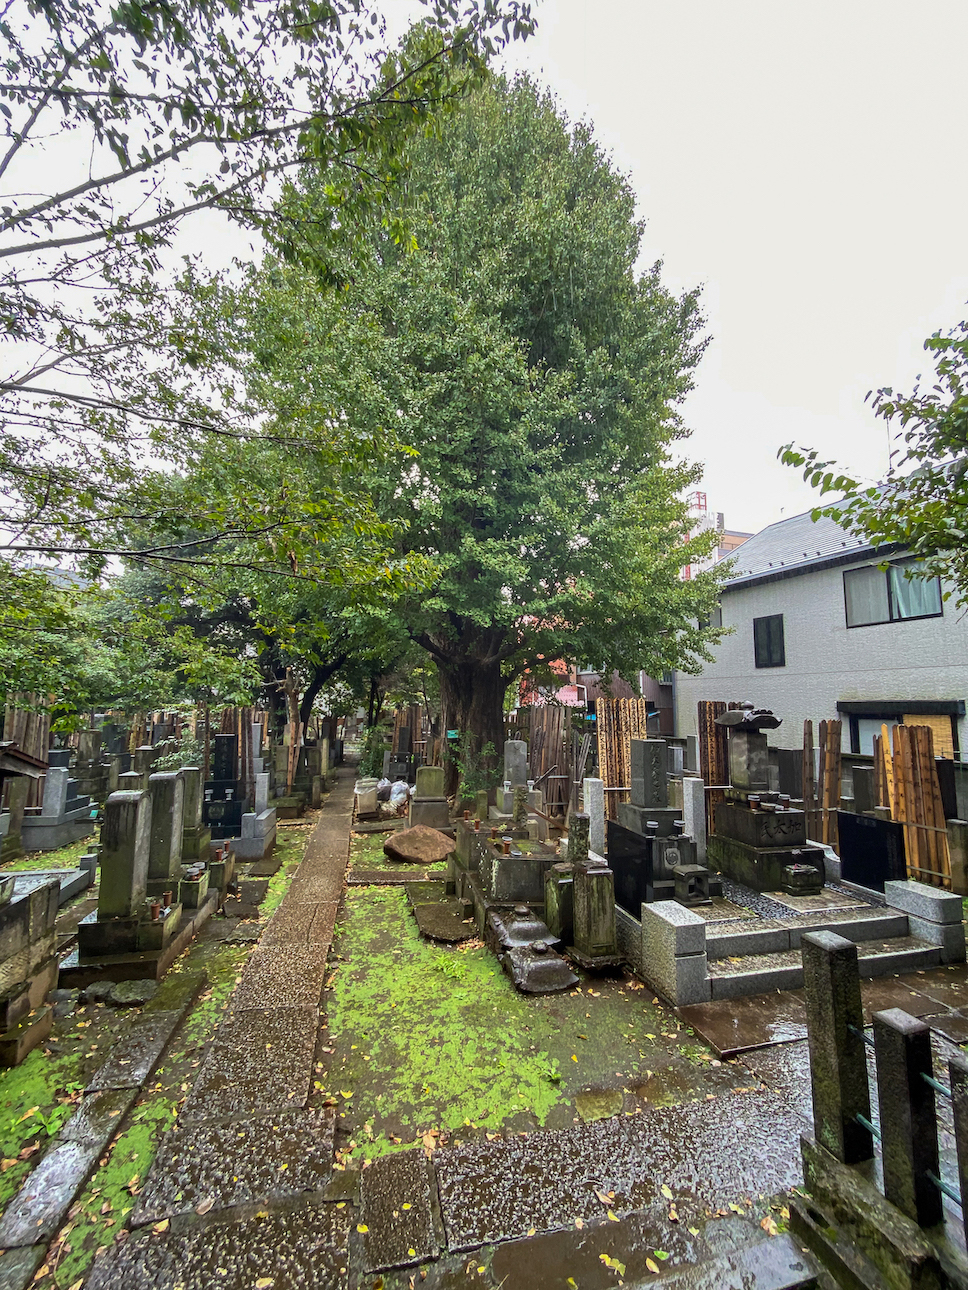 Friedhof vor dem Tempel Kōkoku-ji, hohe buddhistische Grabsteine, grüne Bäume, nasser Asphalt